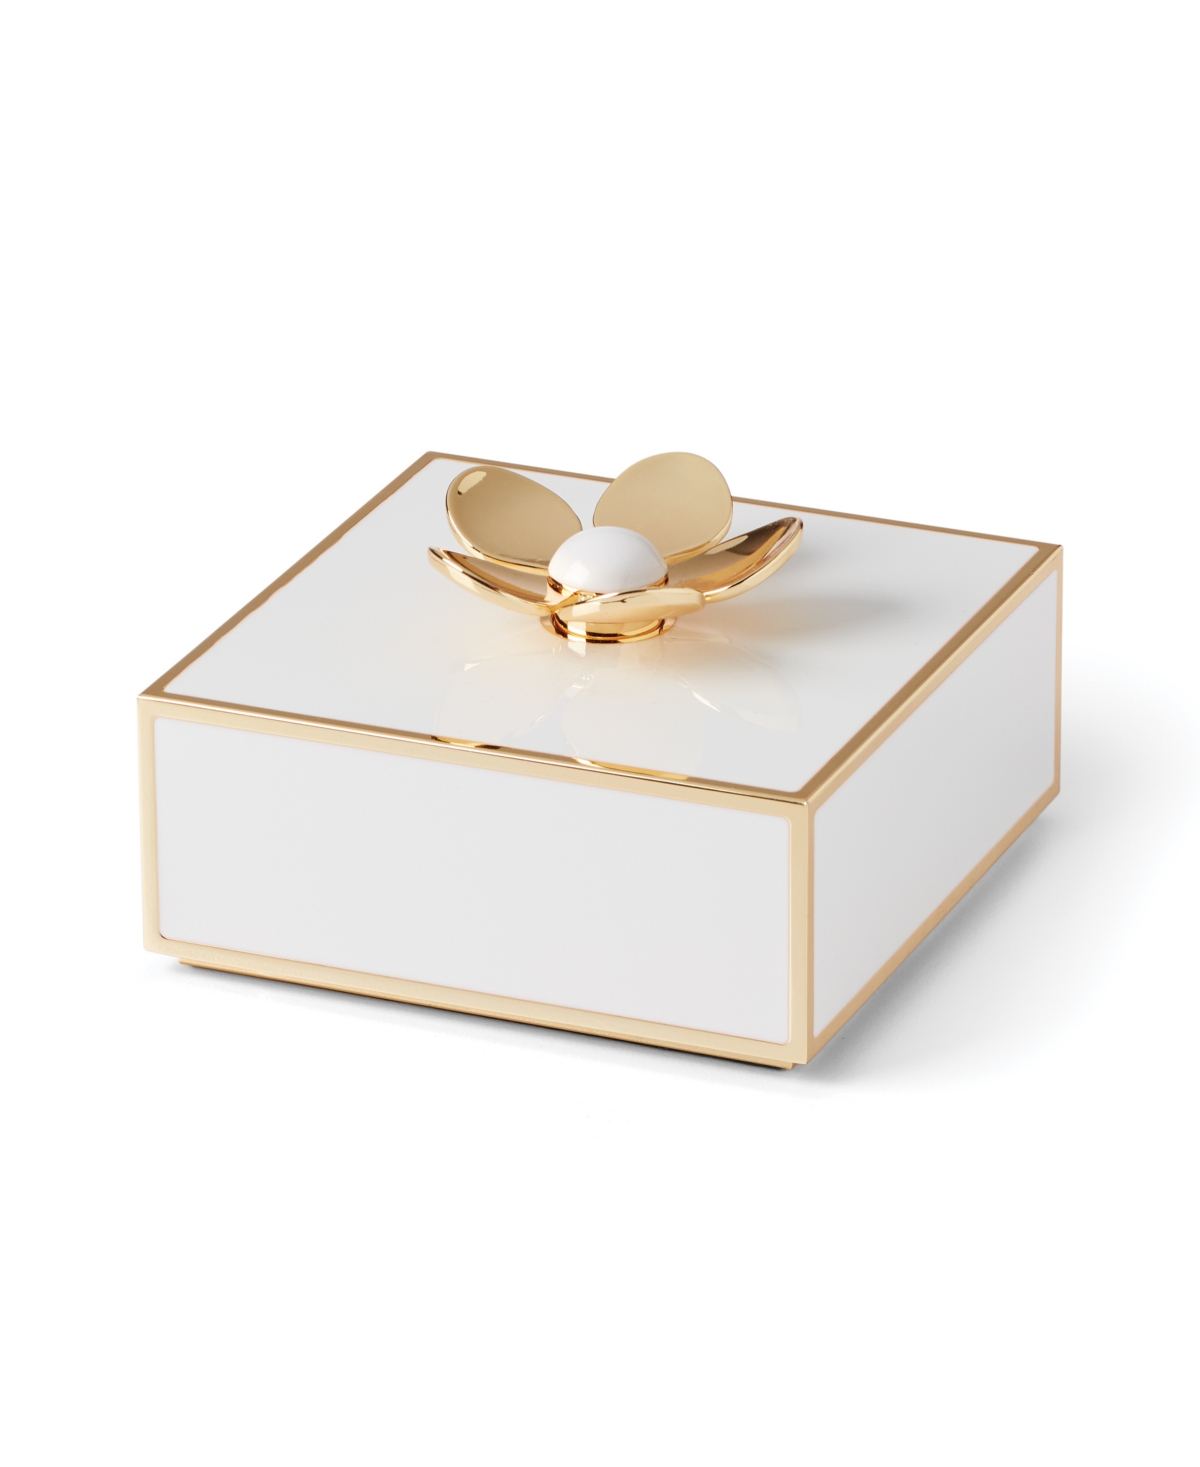 Kate Spade New York Make It Pop Floral Box In Metallic